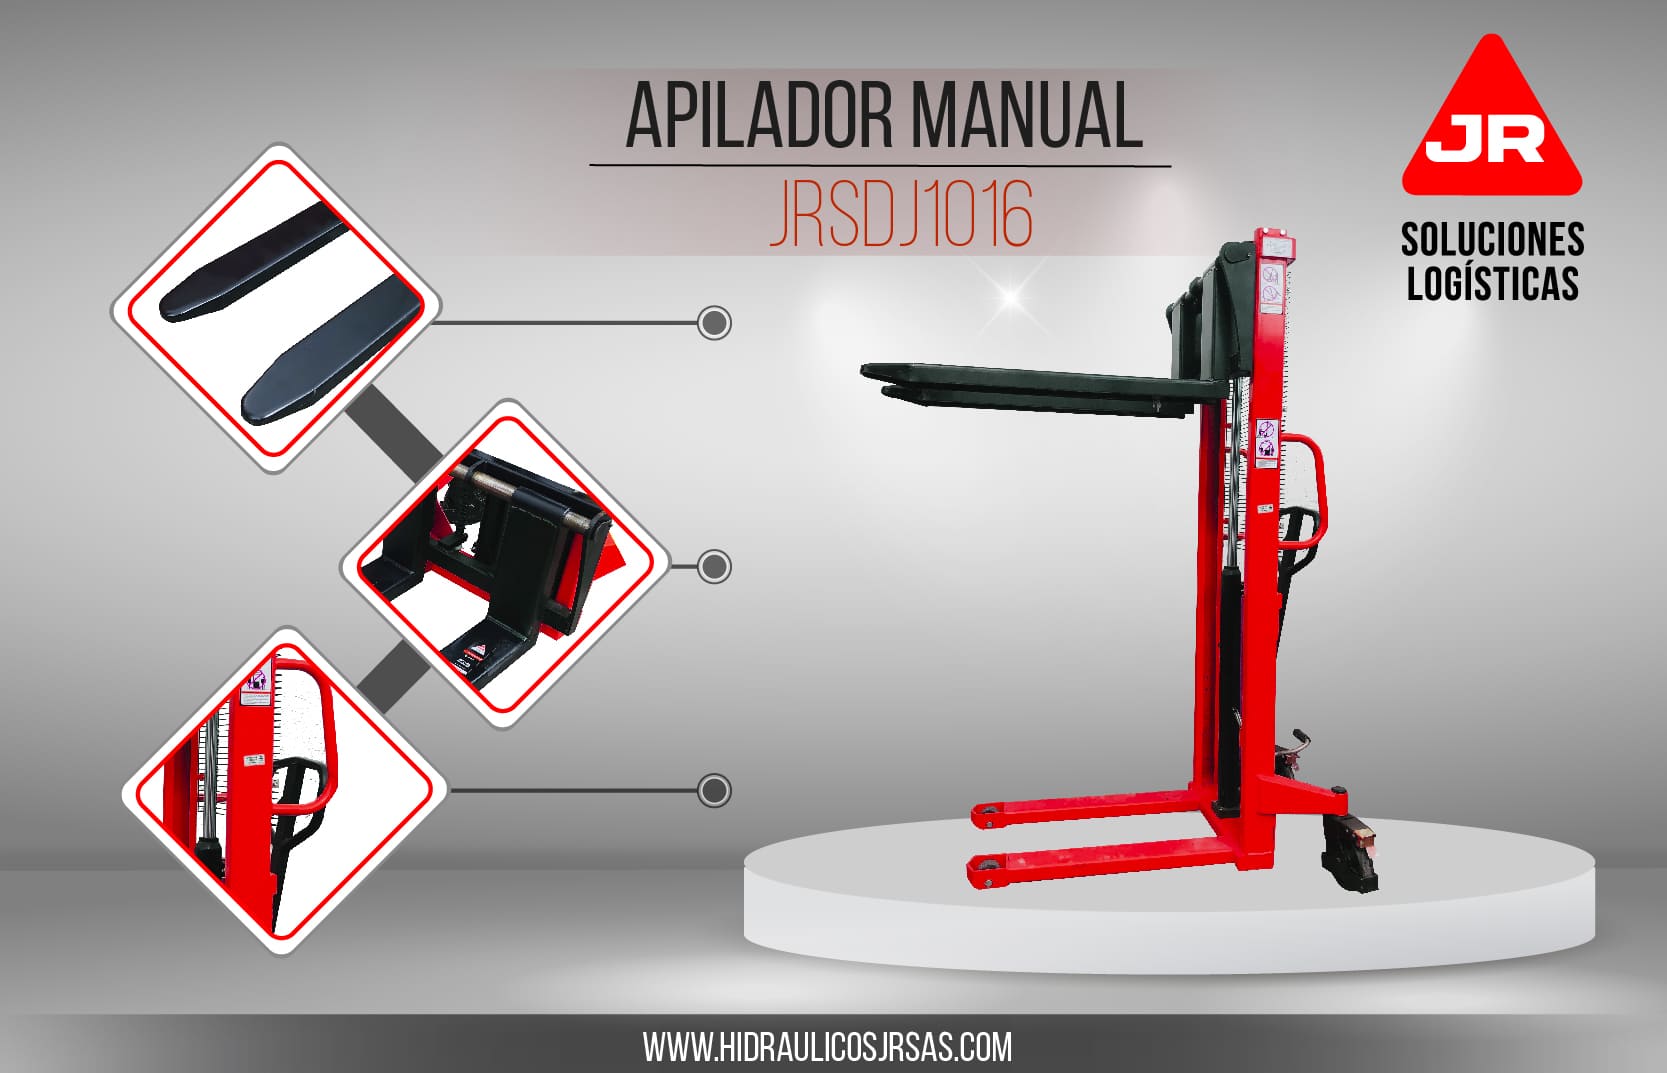 Apilador Manual - Apilador Ref. JRSDJ1016